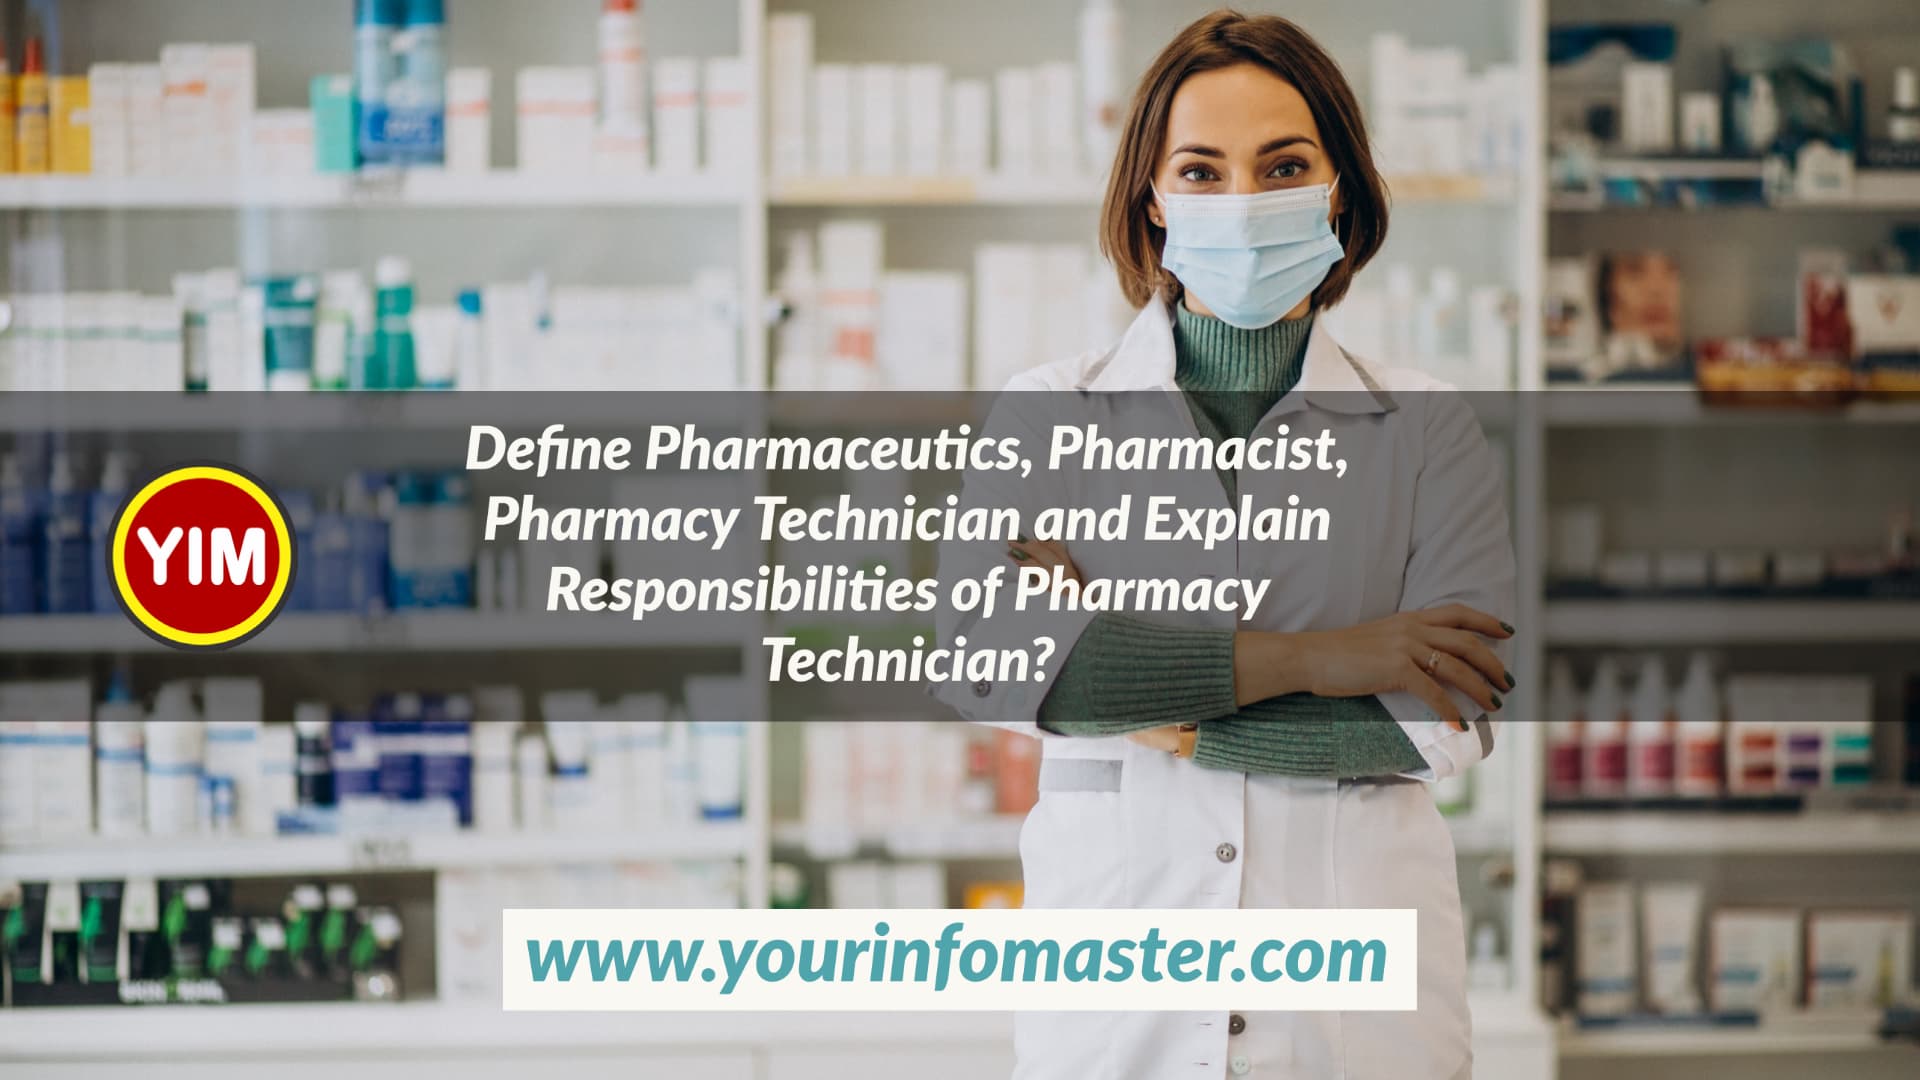 Category - B, Pharmaceutics, Pharmacist, Pharmacy Technician, Responsibilities of Pharmacy Technician